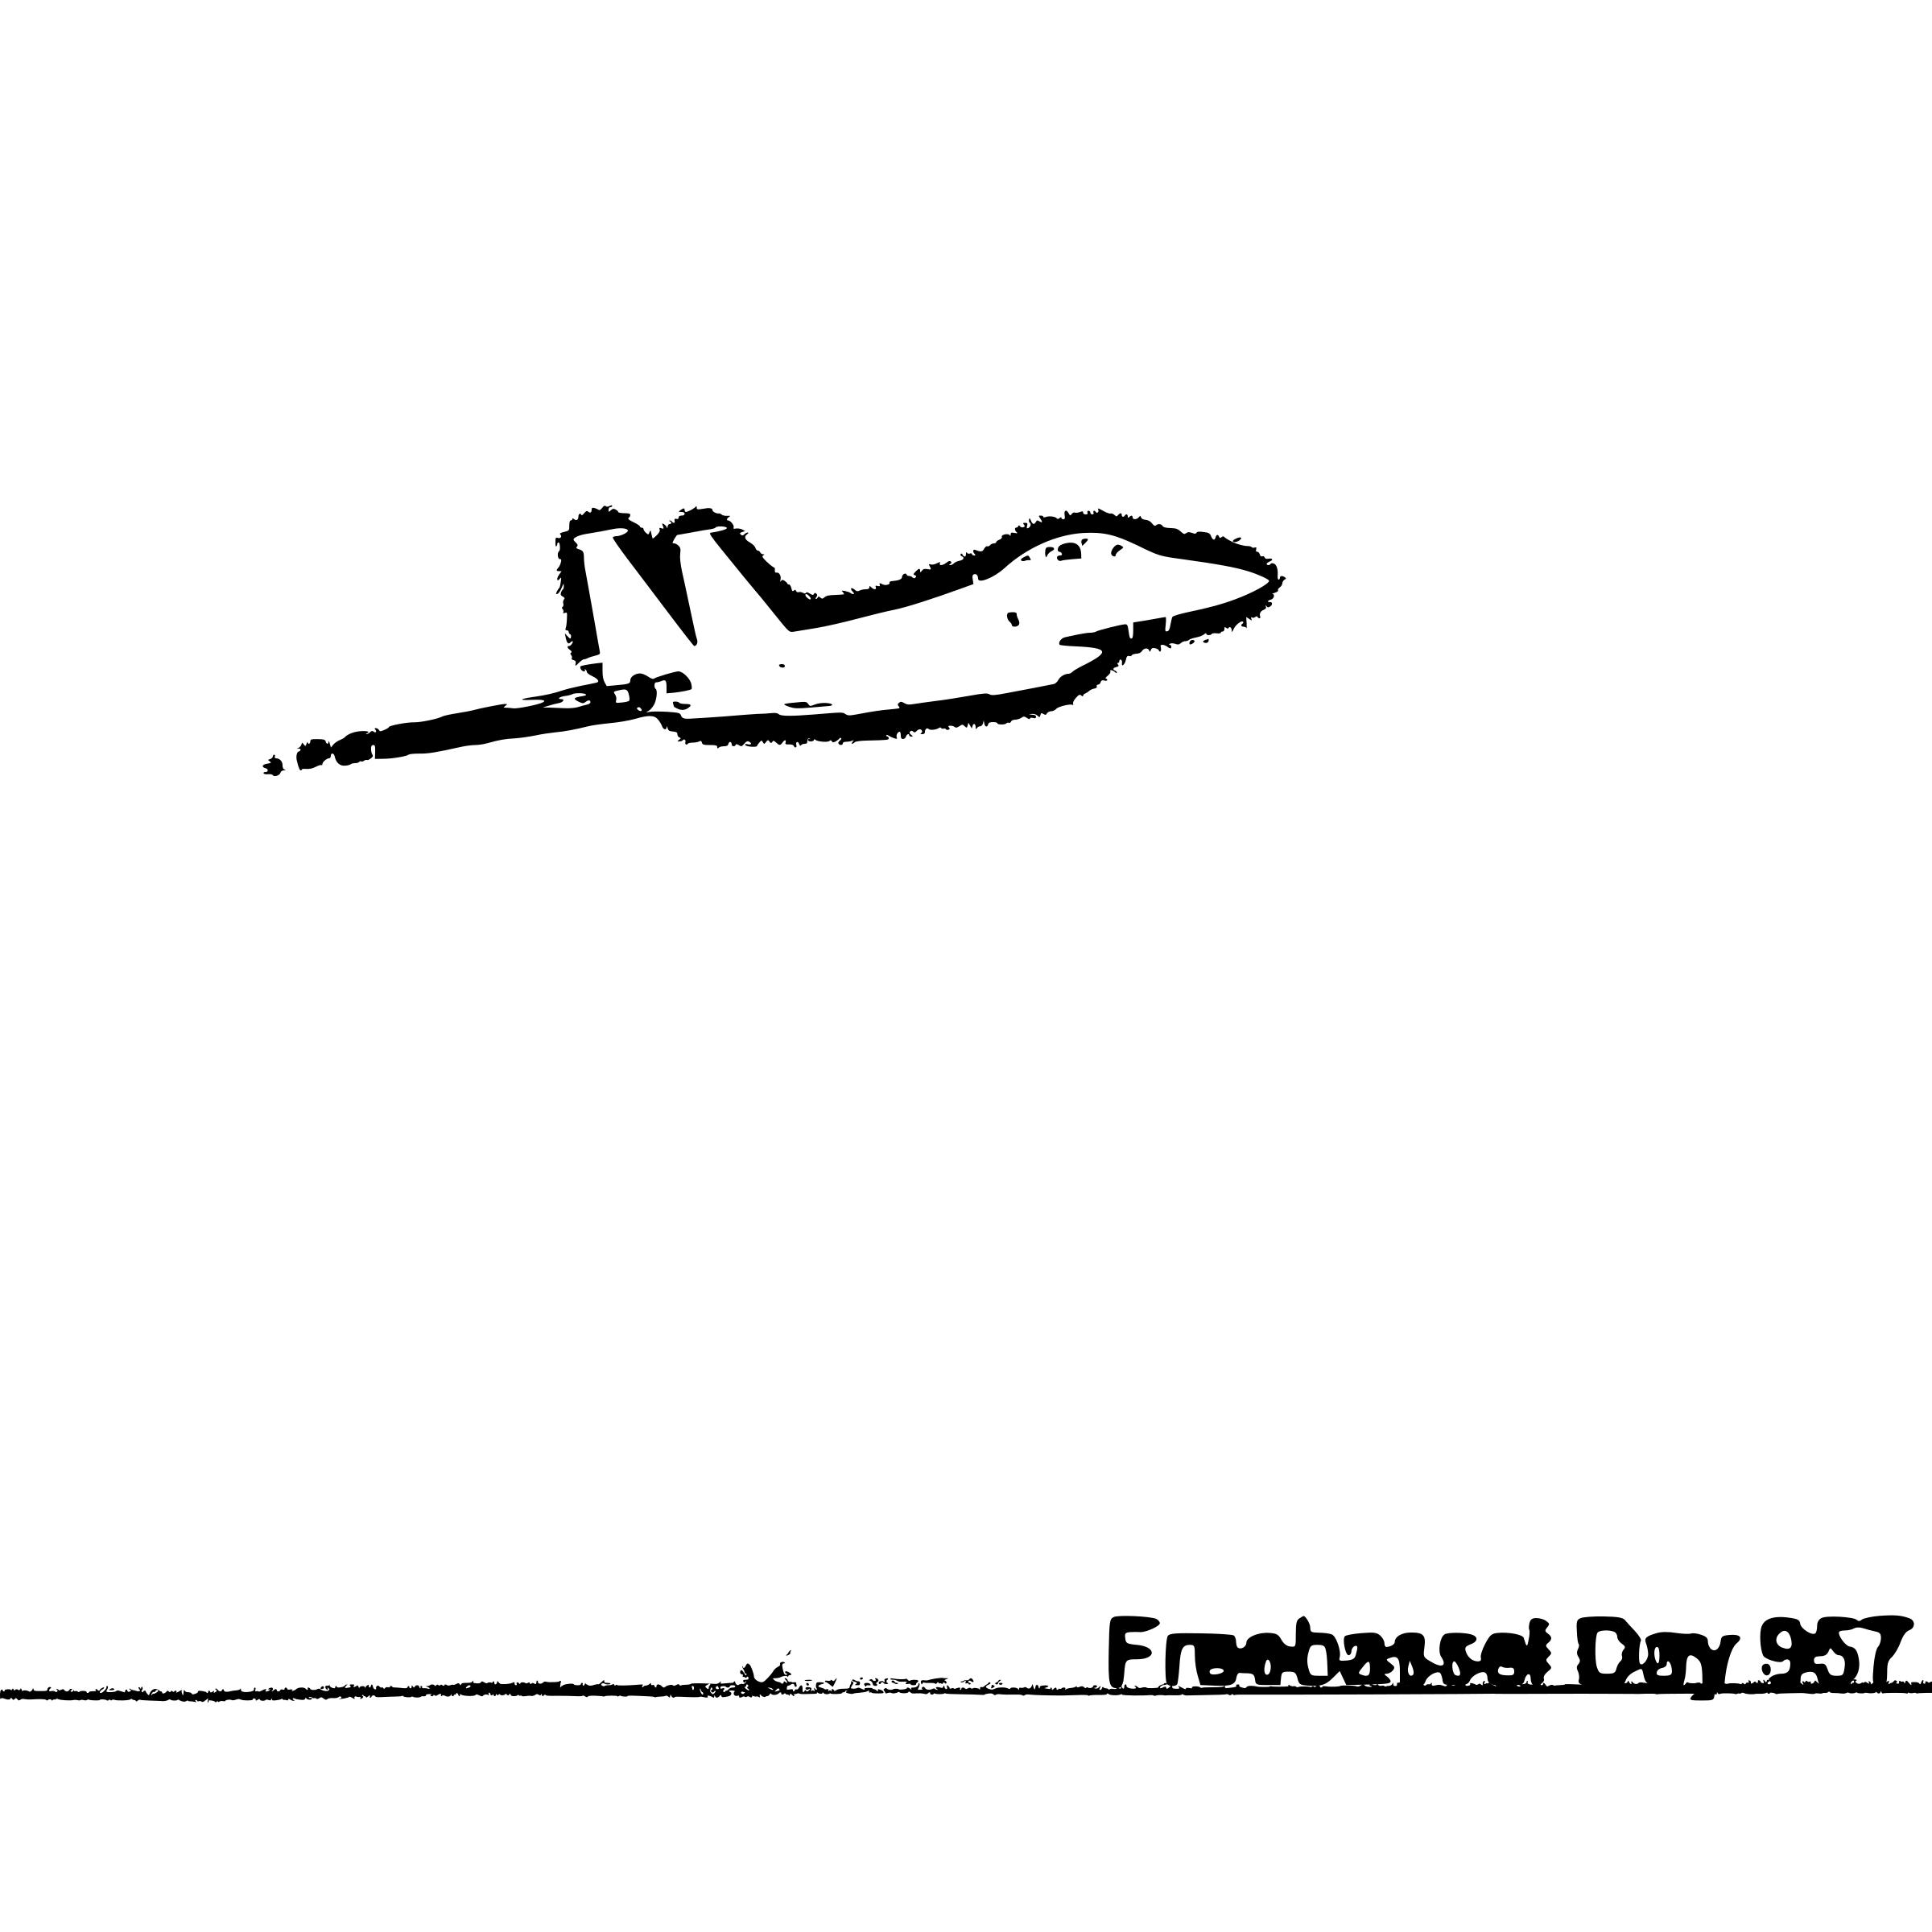 Freebassel Day 957 Top Jet icons